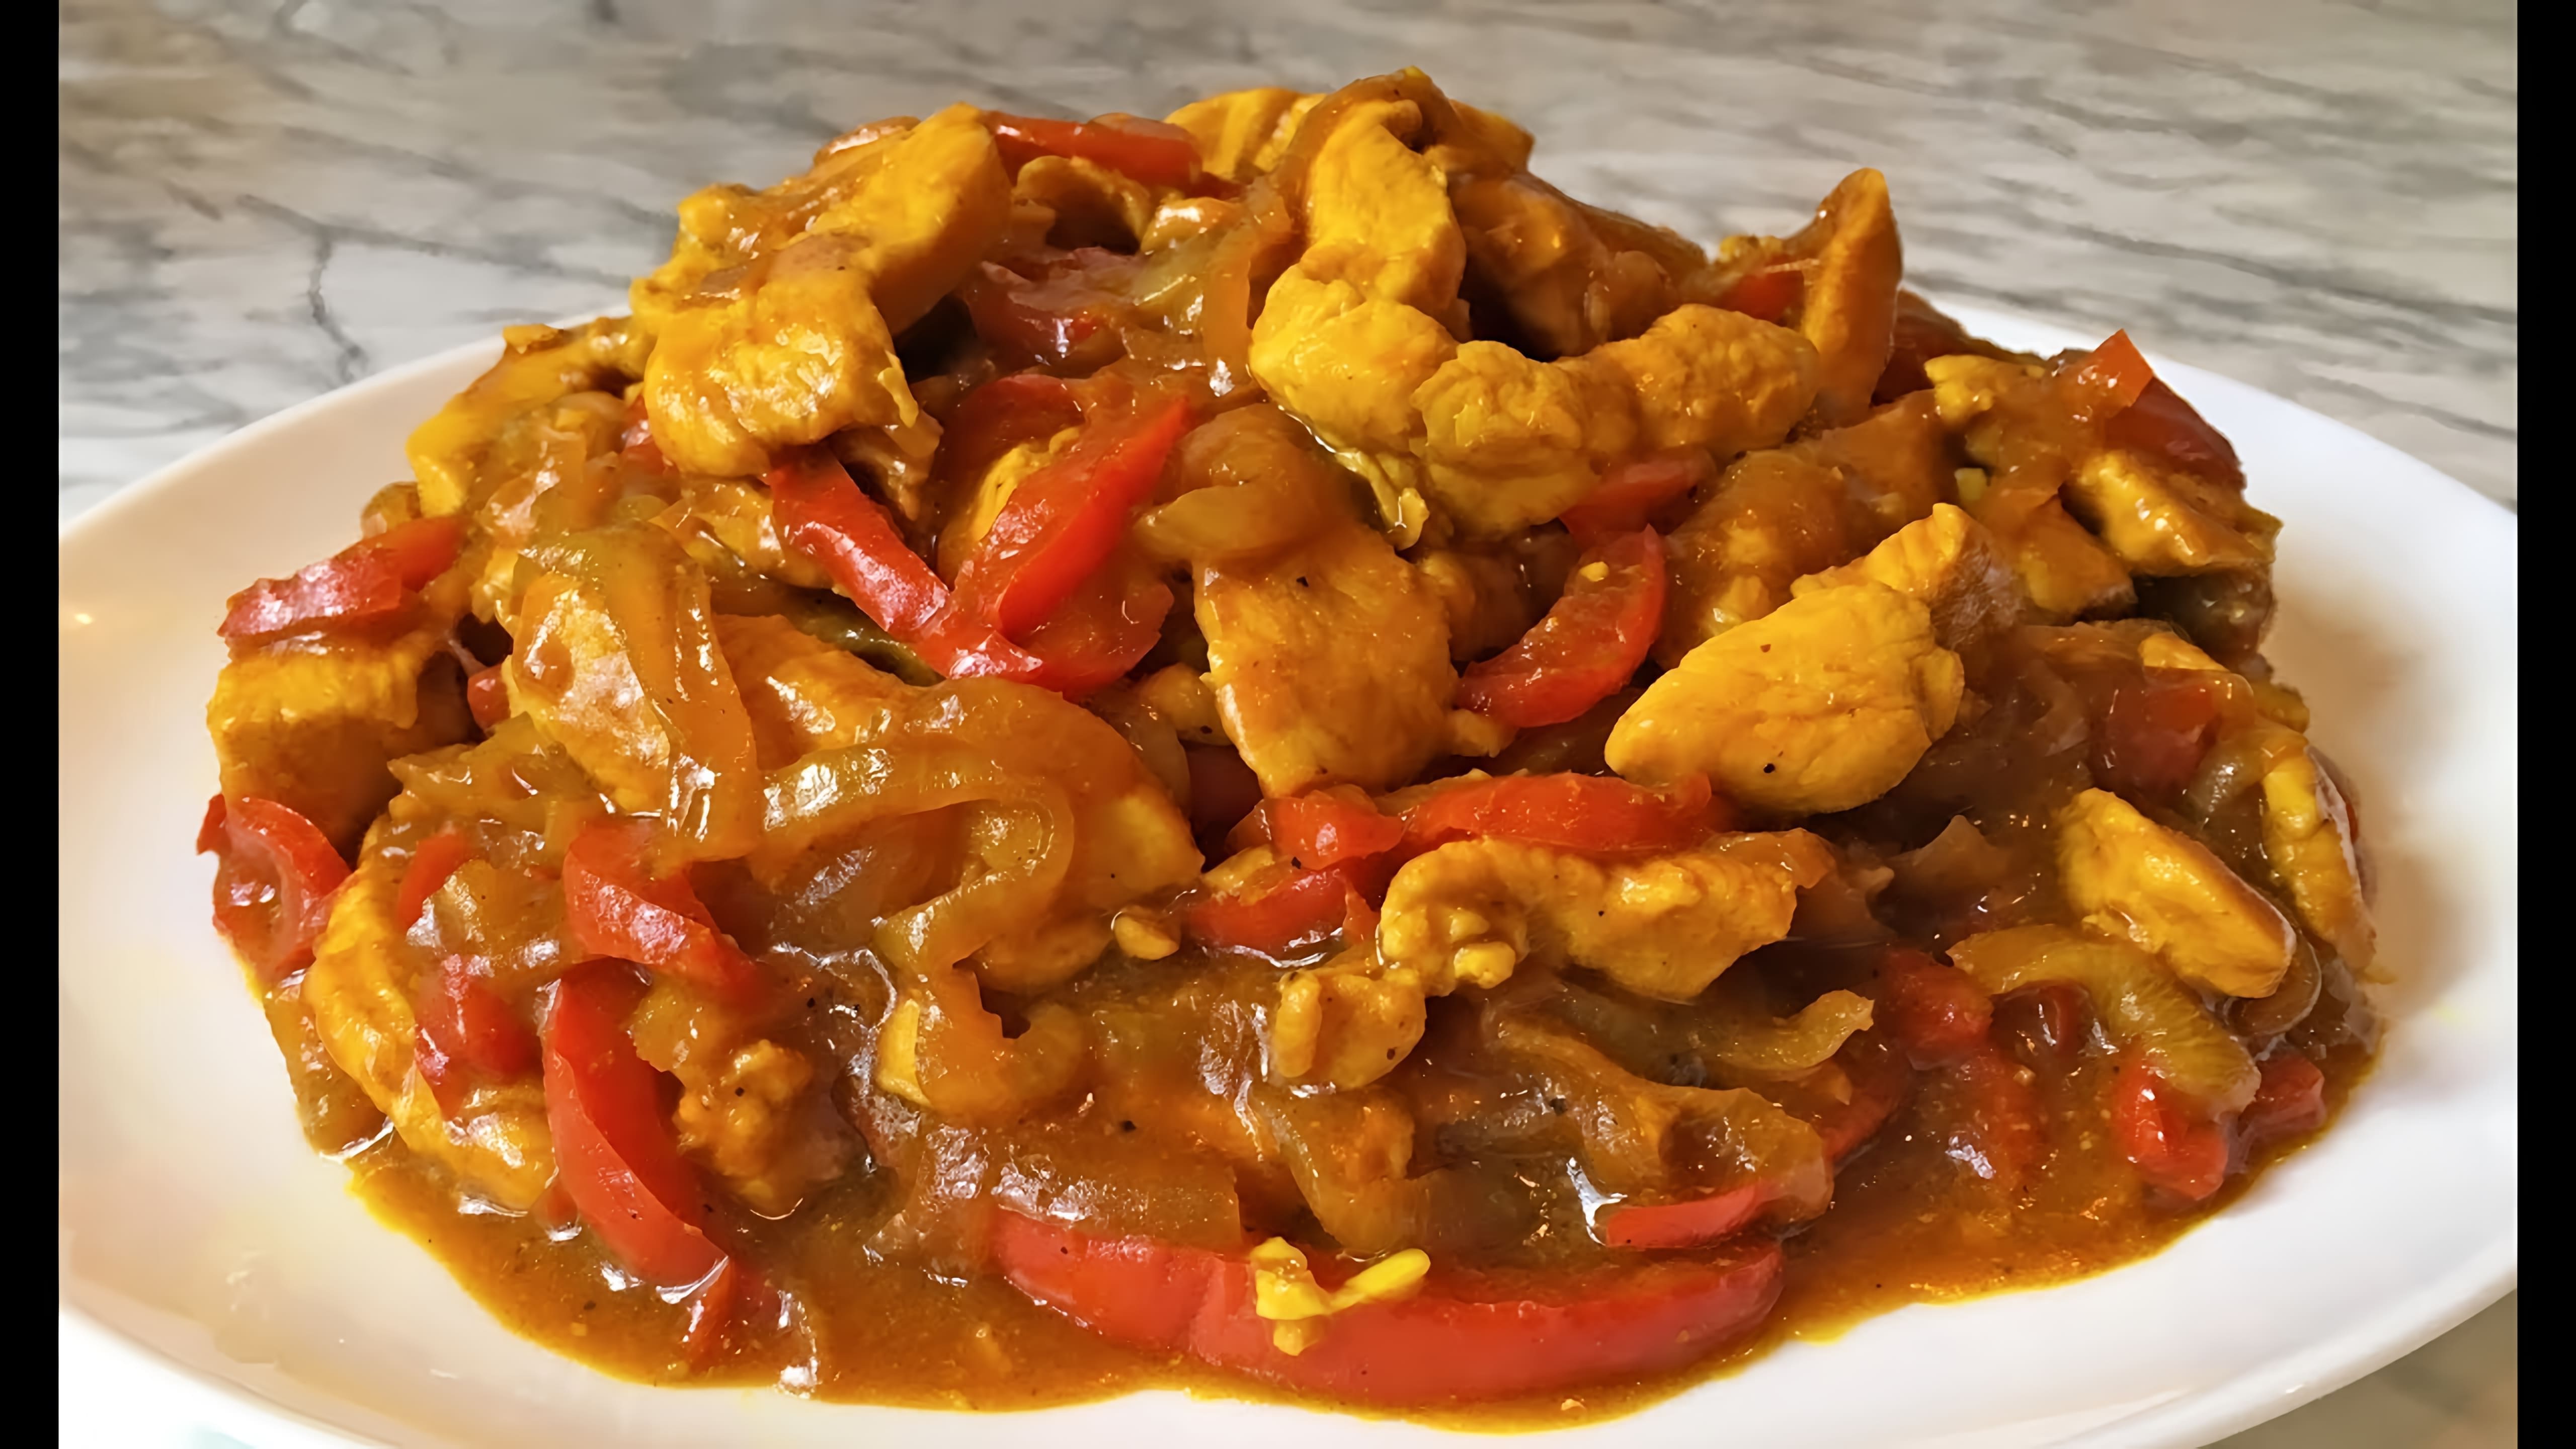 Курица По-Тайски / Thai Chicken Recipe / Курица с Овощами / Тайский Рецепт (Вкусно и Быстро)